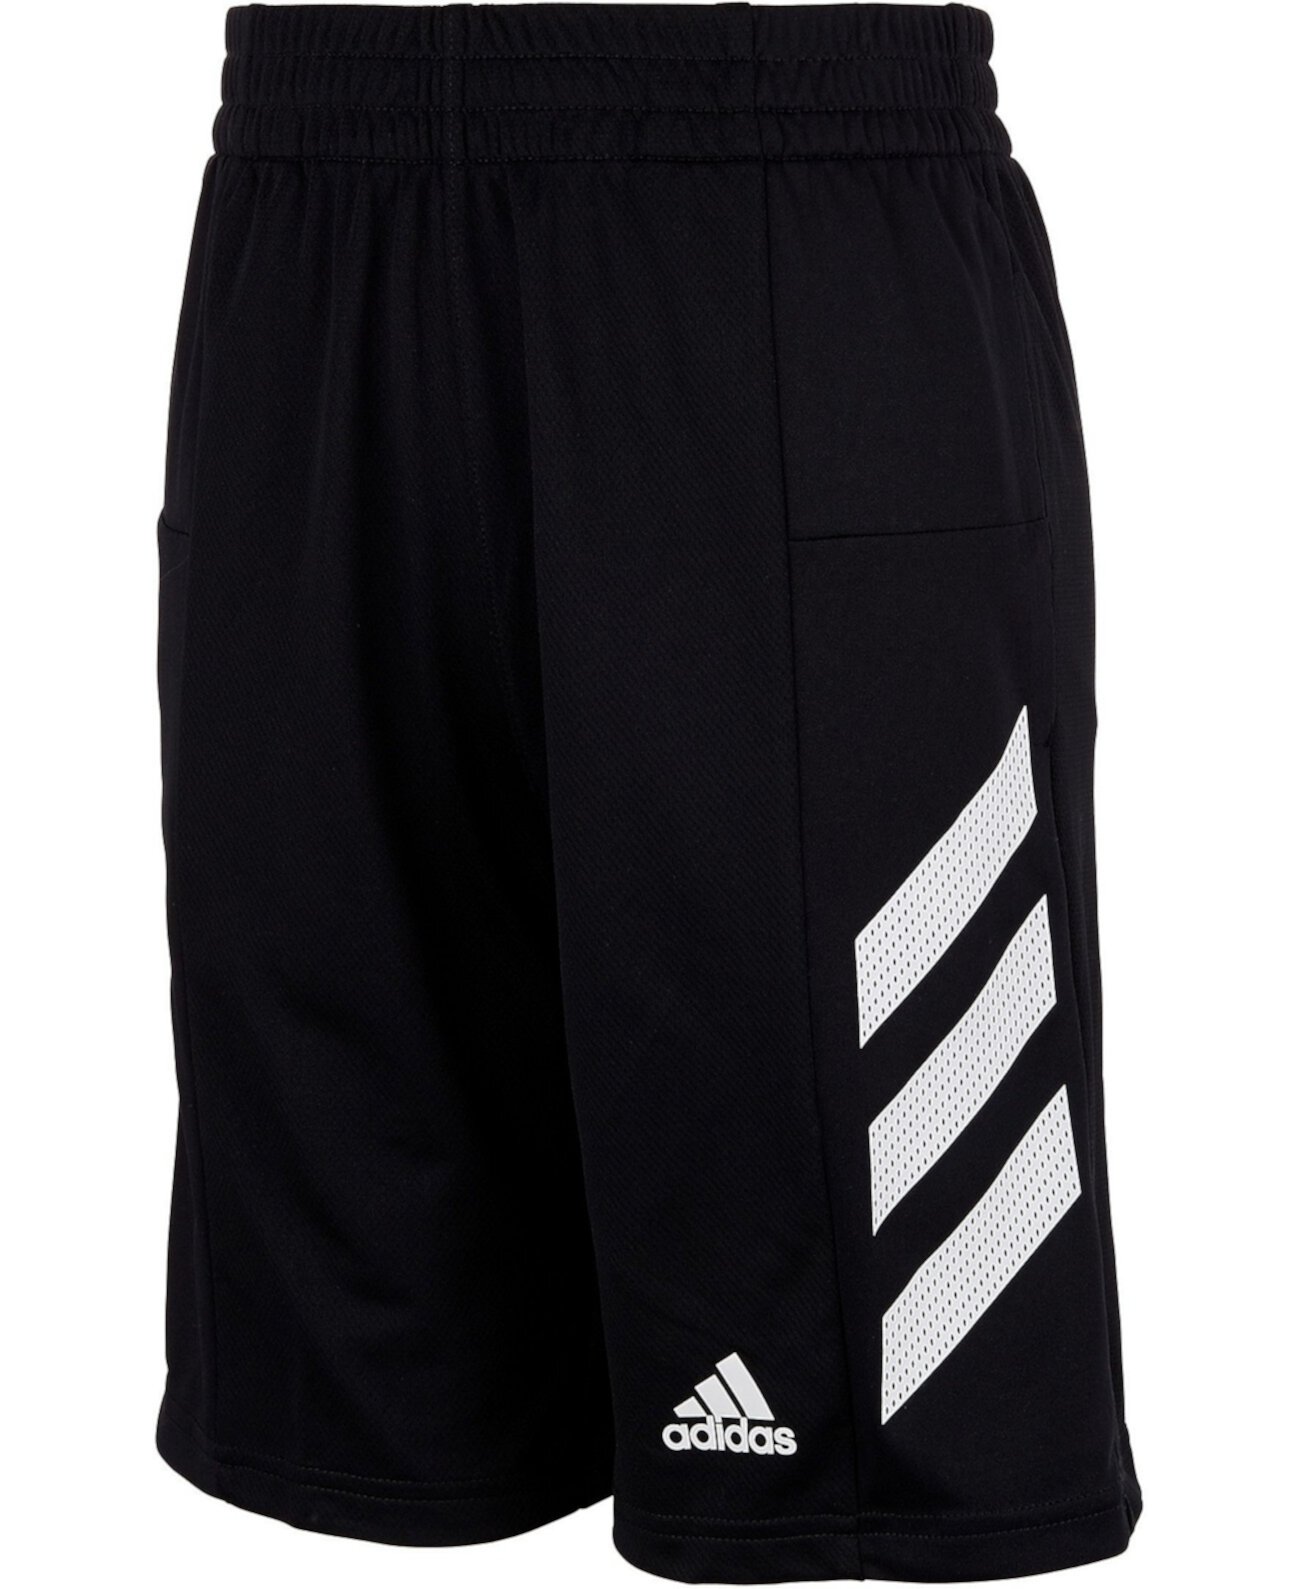 Little Boys Pro Sport шорты с 3 полосками Adidas